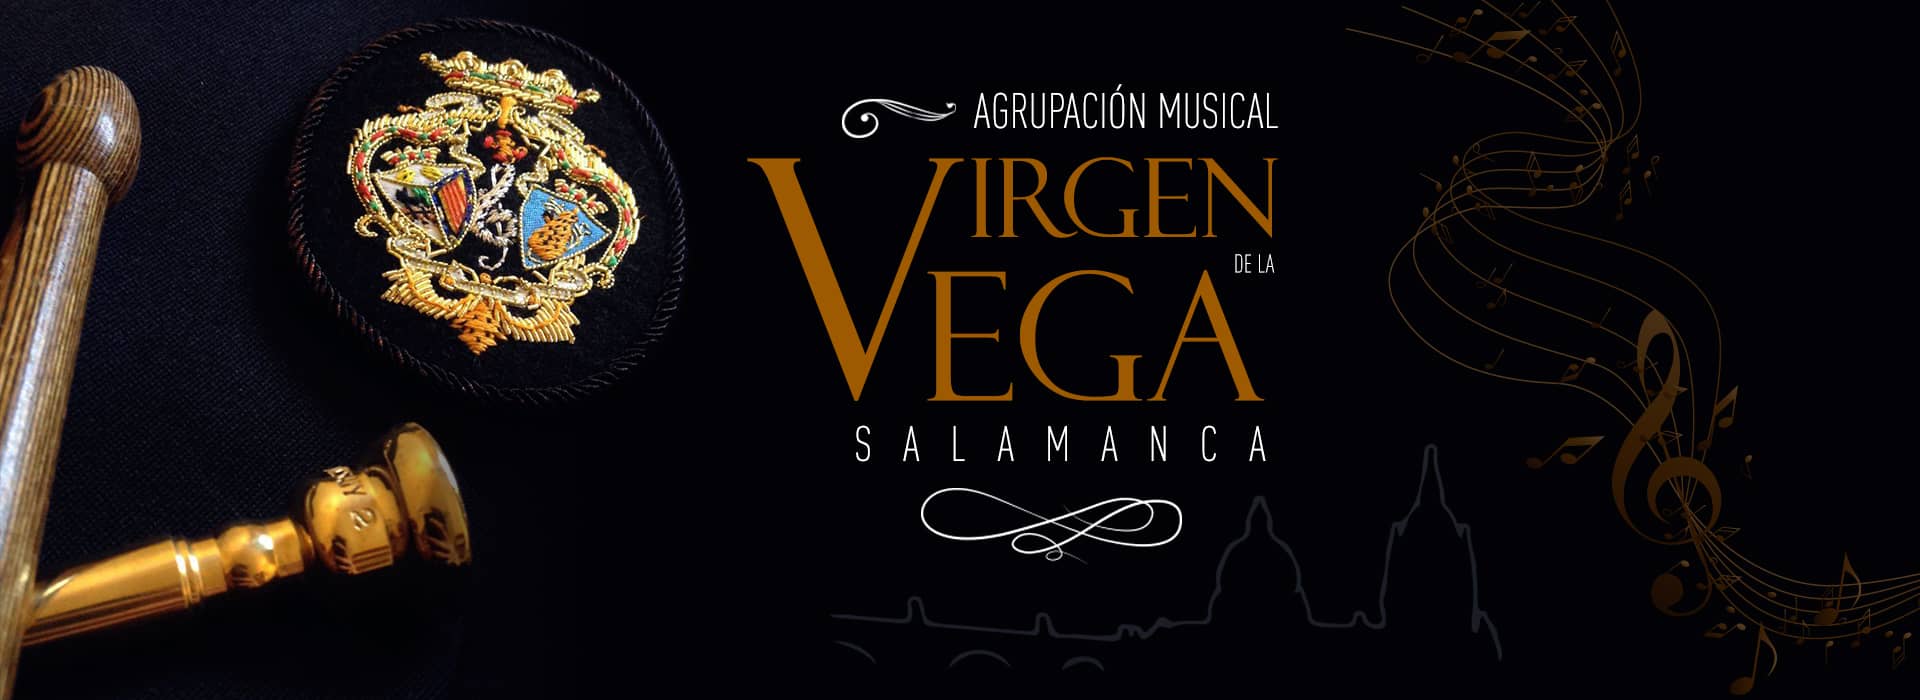 Muestra franja decorativa alegórica a la agrupación musical virgen de la vega de salamanca